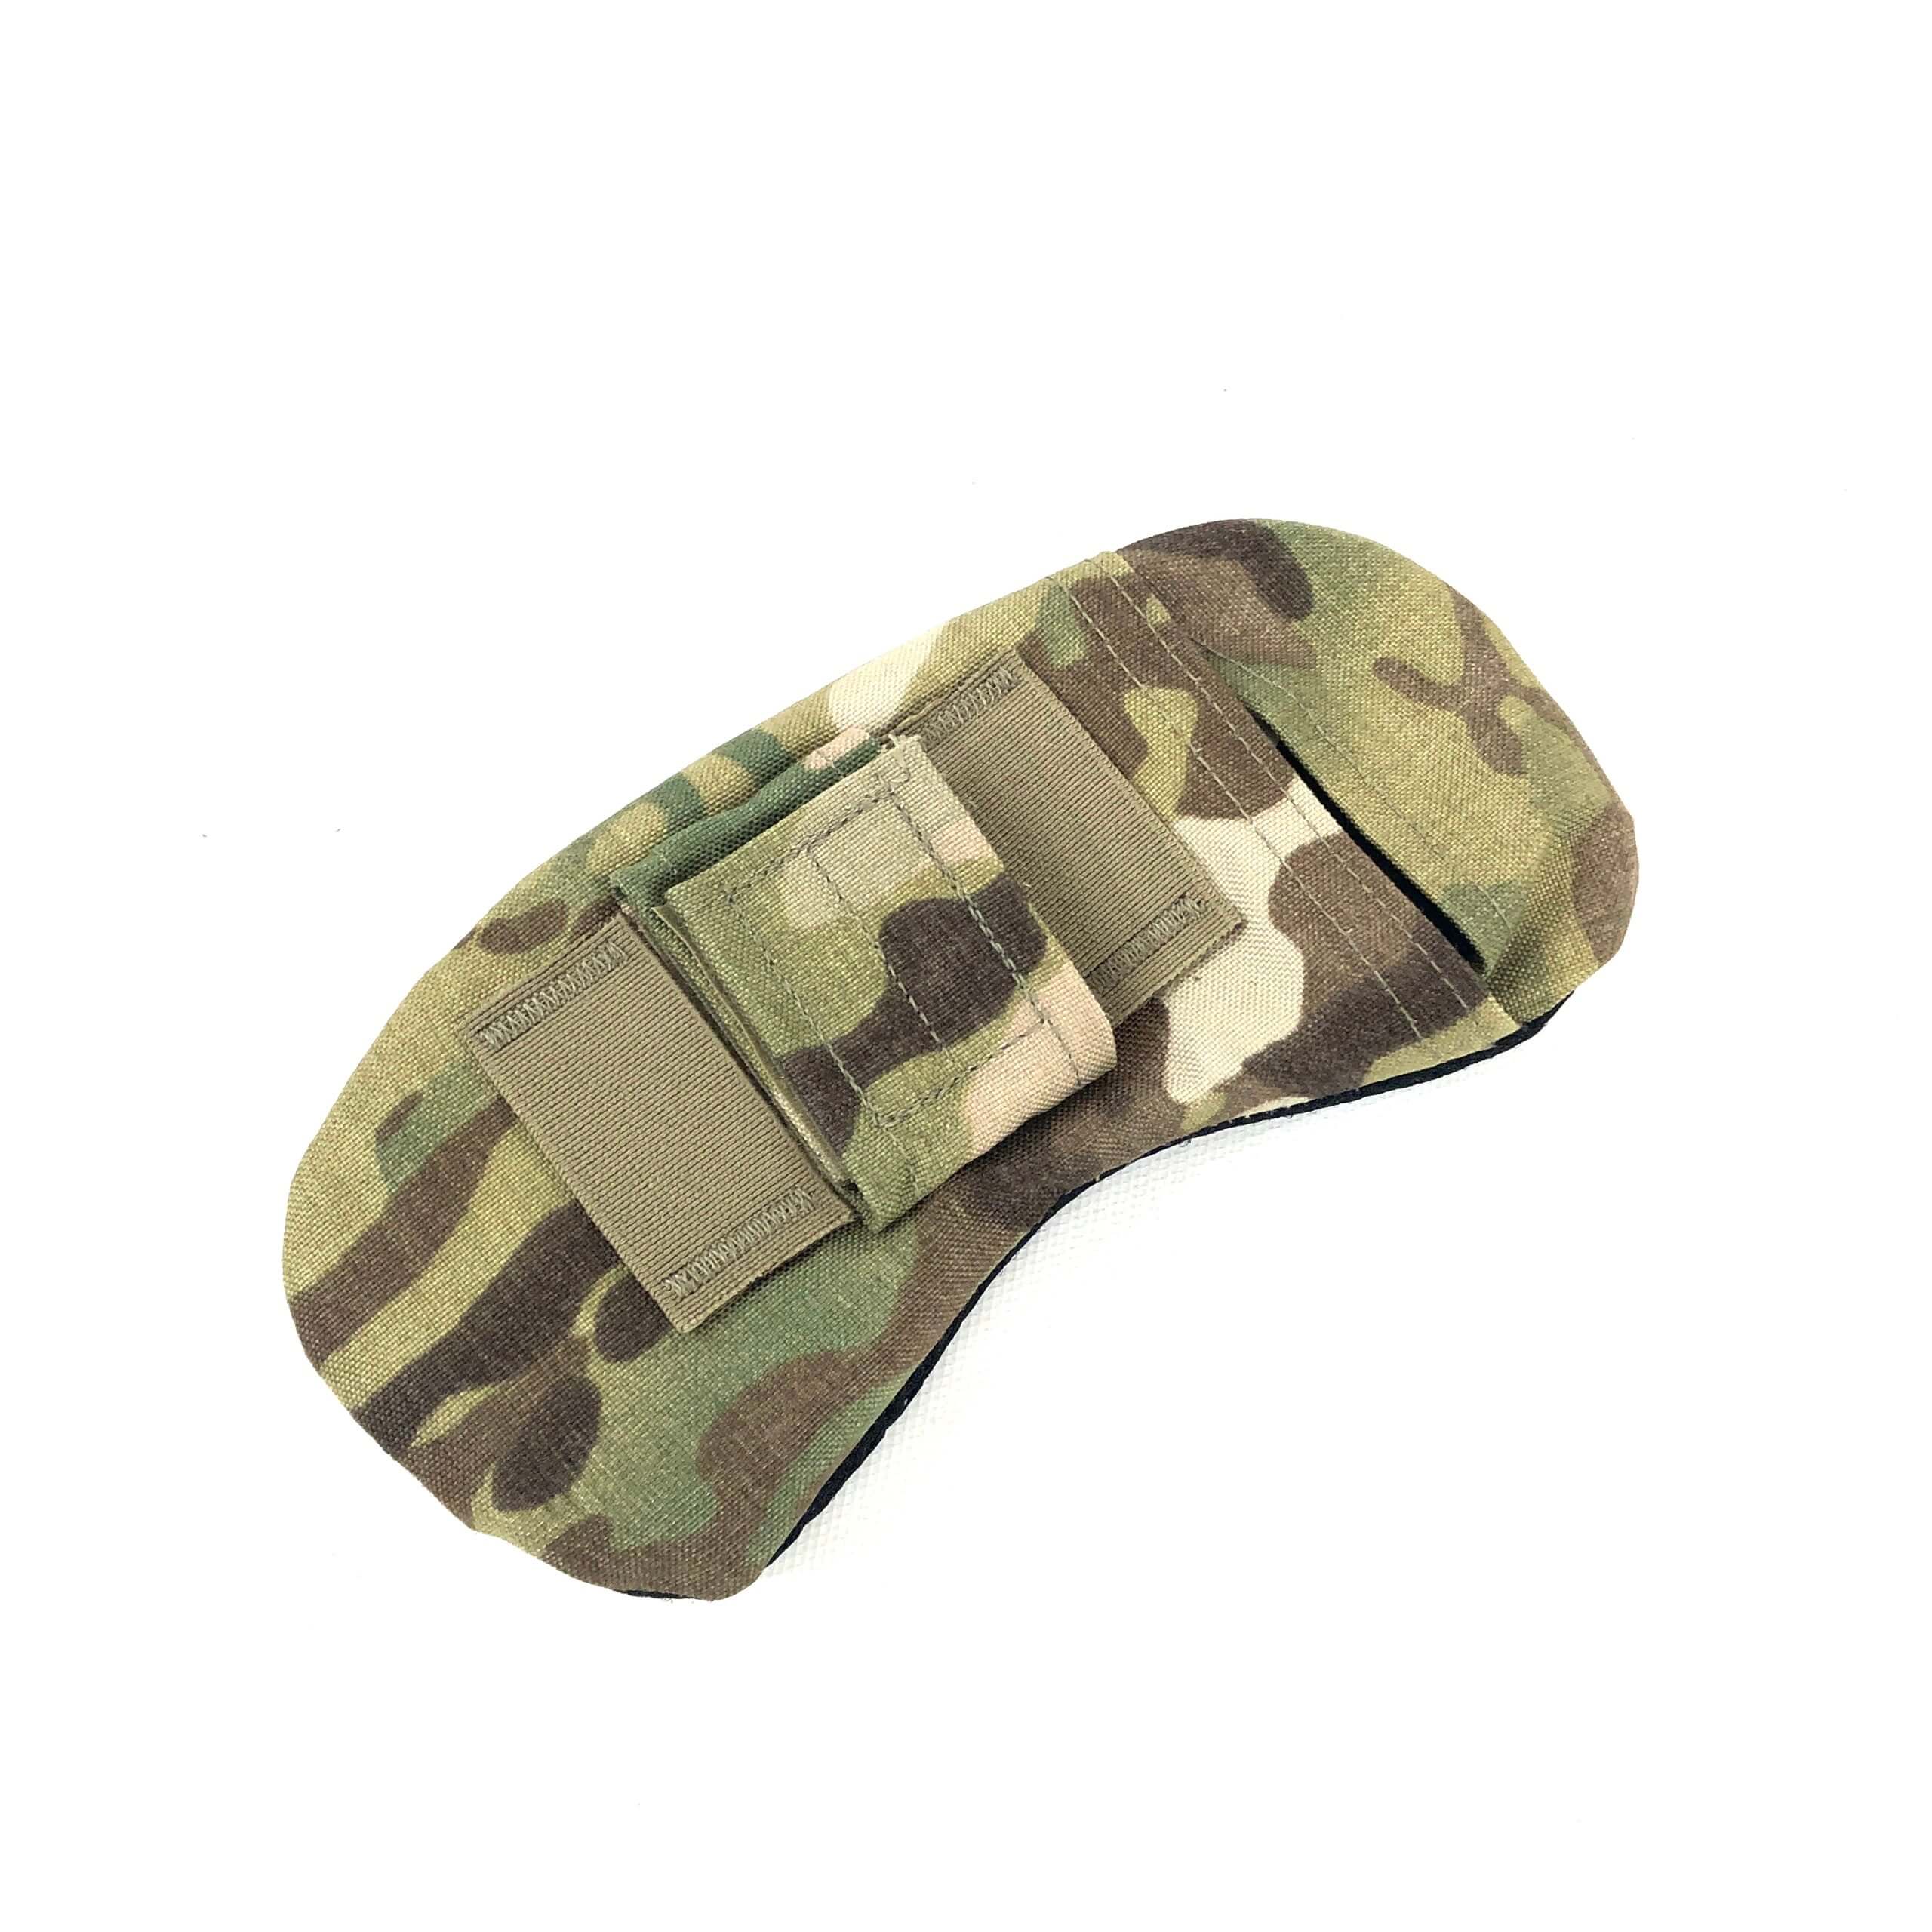 US Army Helmet NAPE Pad, Multicam [Genuine Army Issue]